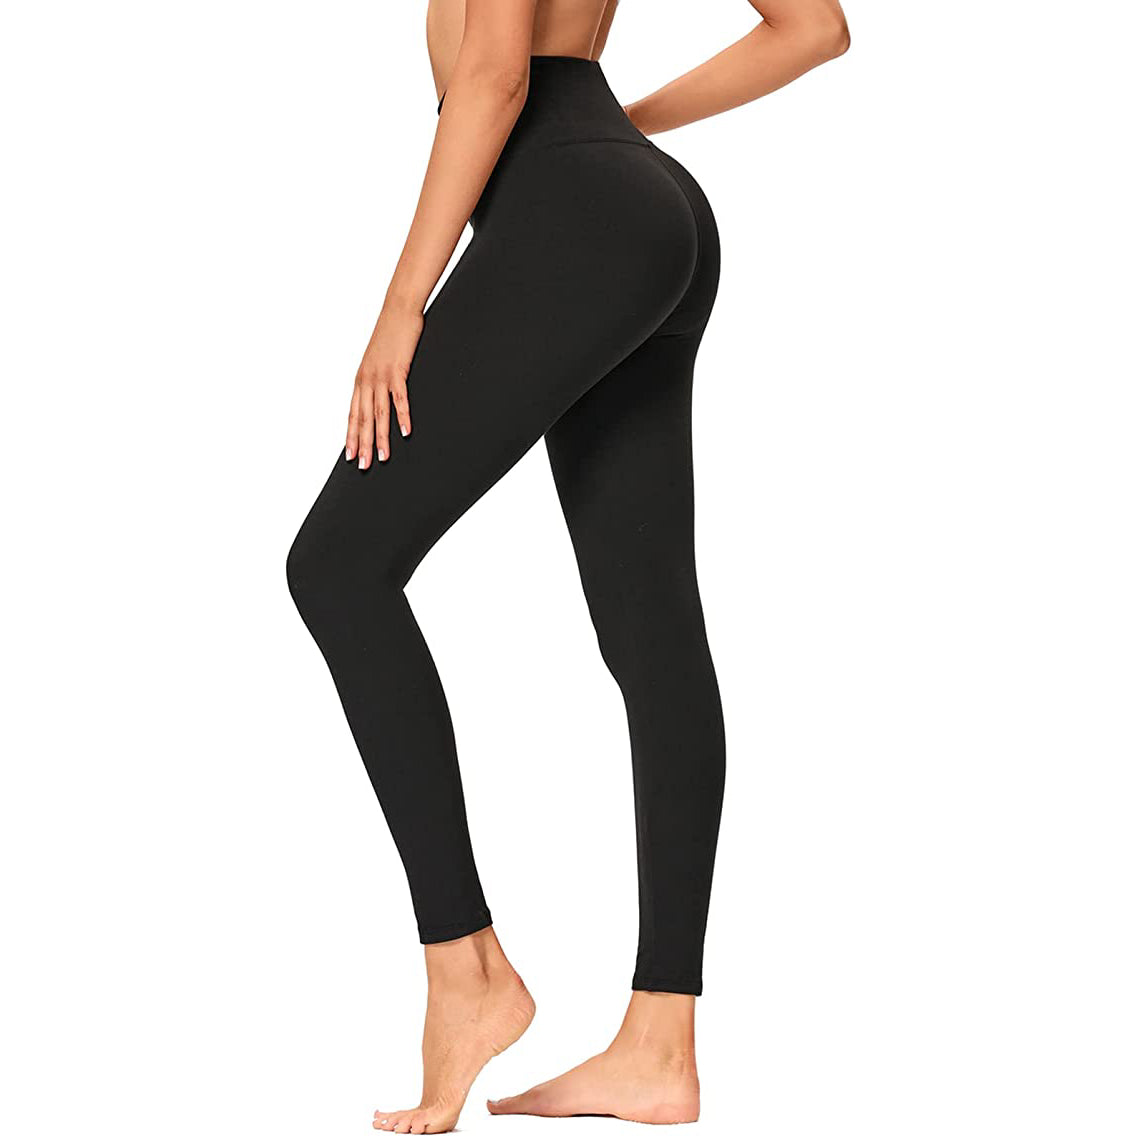 Wholesale High Waisted Plain Black Leggings Soft Slim Tummy Control Pants